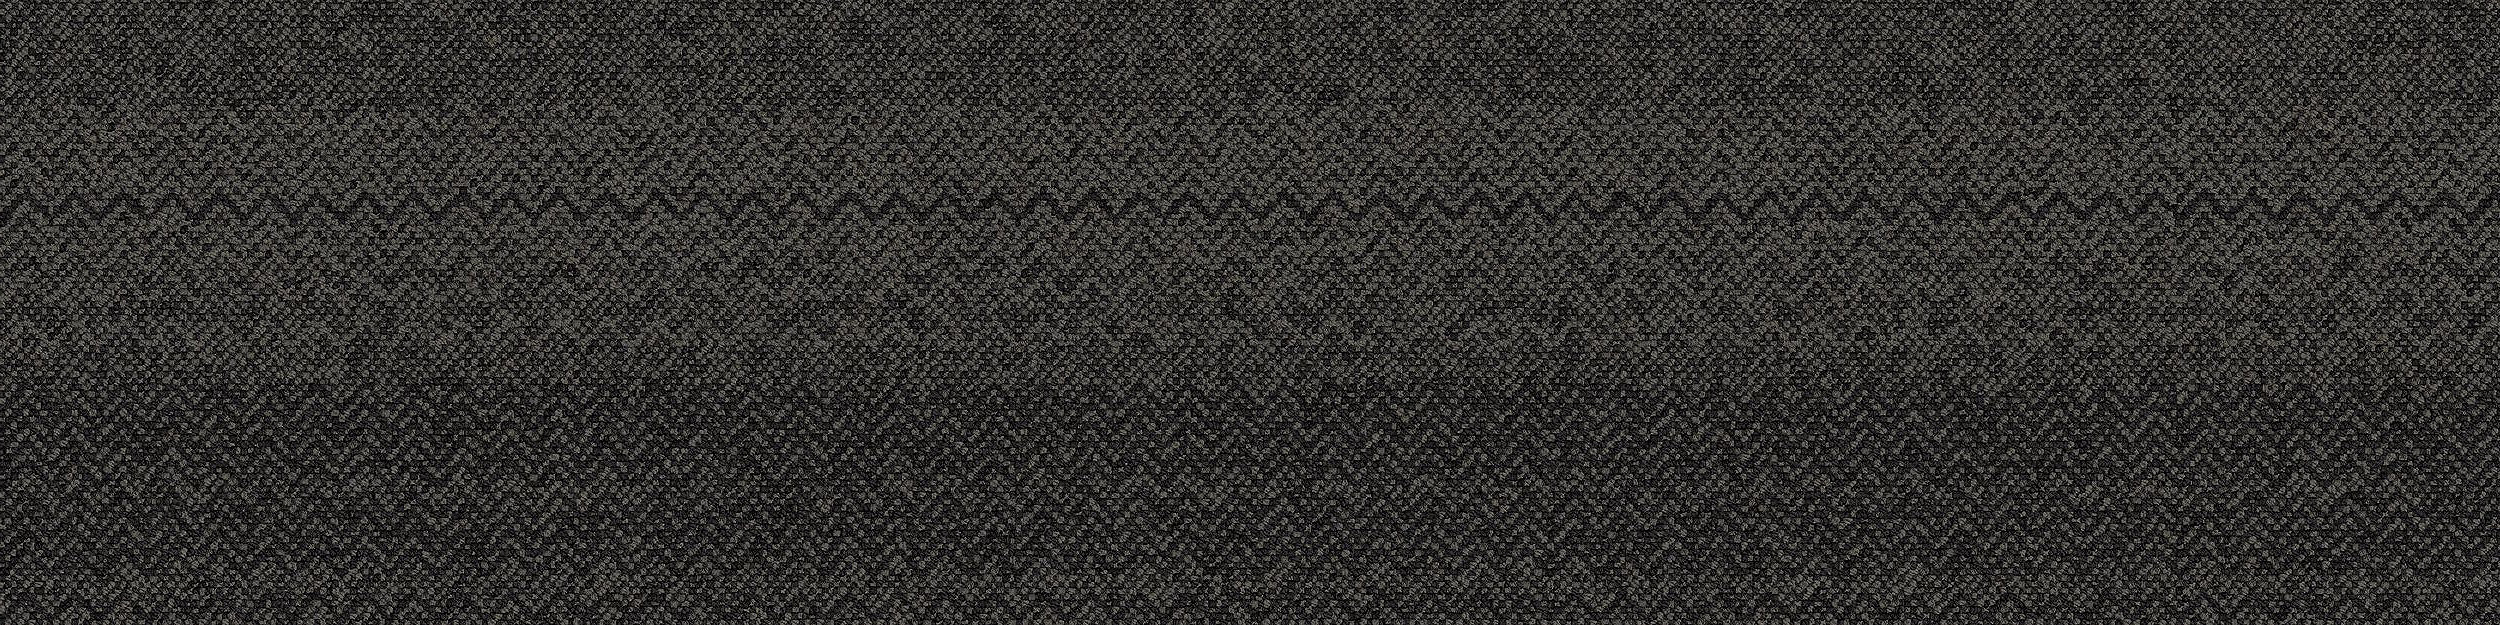 Stitchery Carpet Tile In Slate Stitchery image number 6